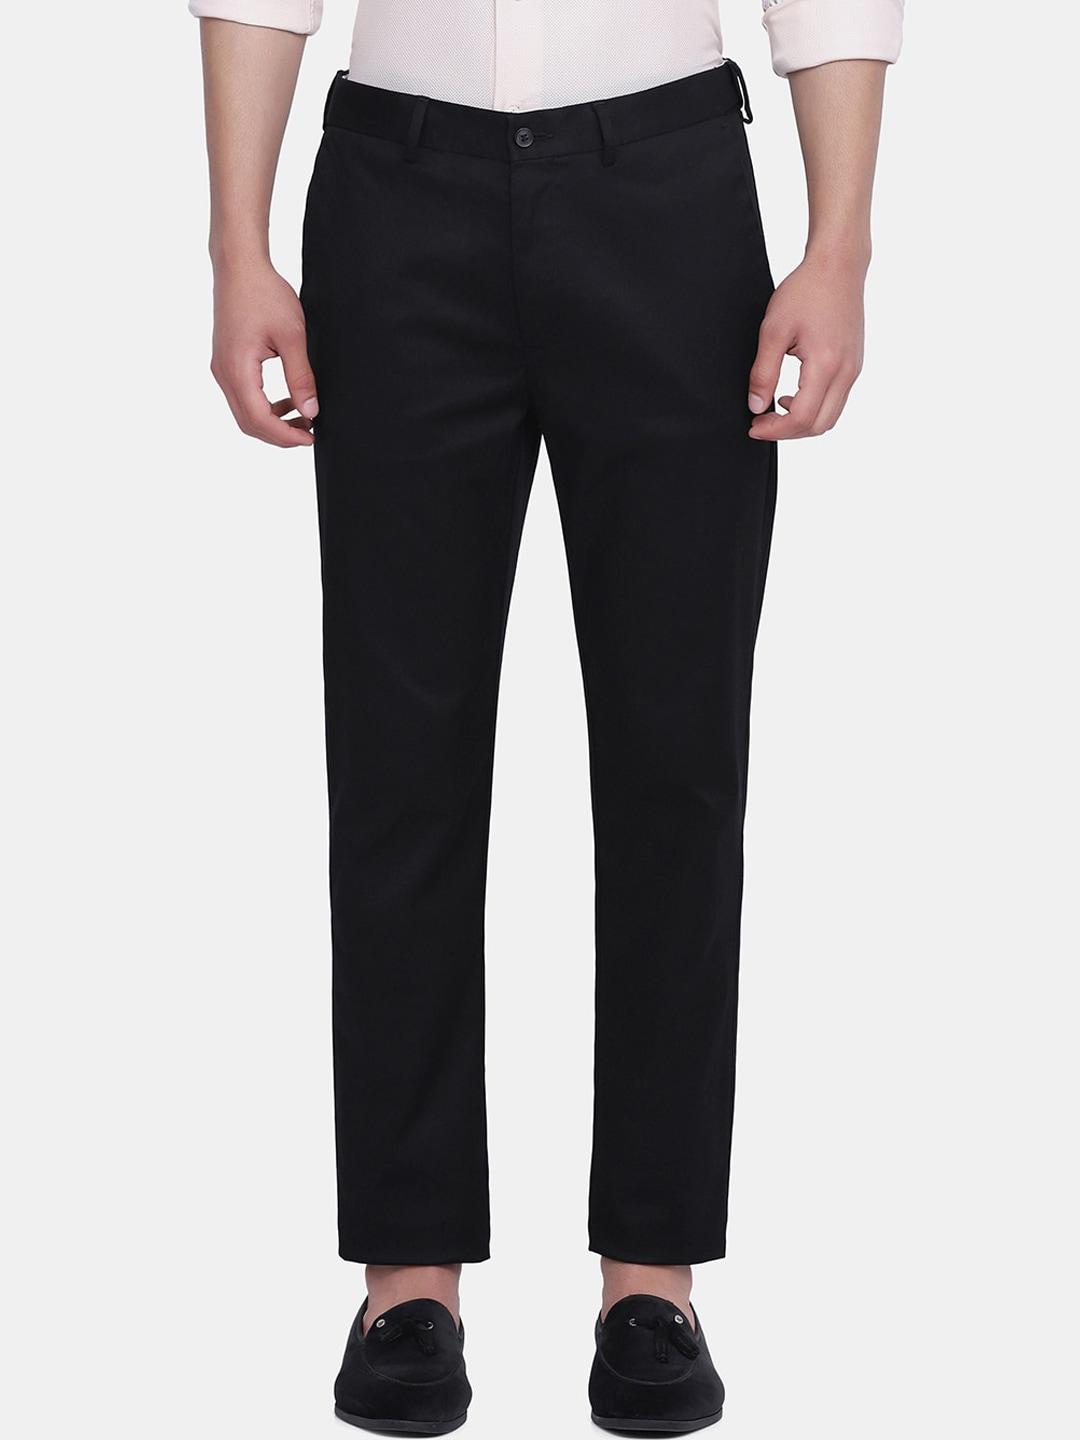 blackberrys-men-black-arise-regular-fit-trousers